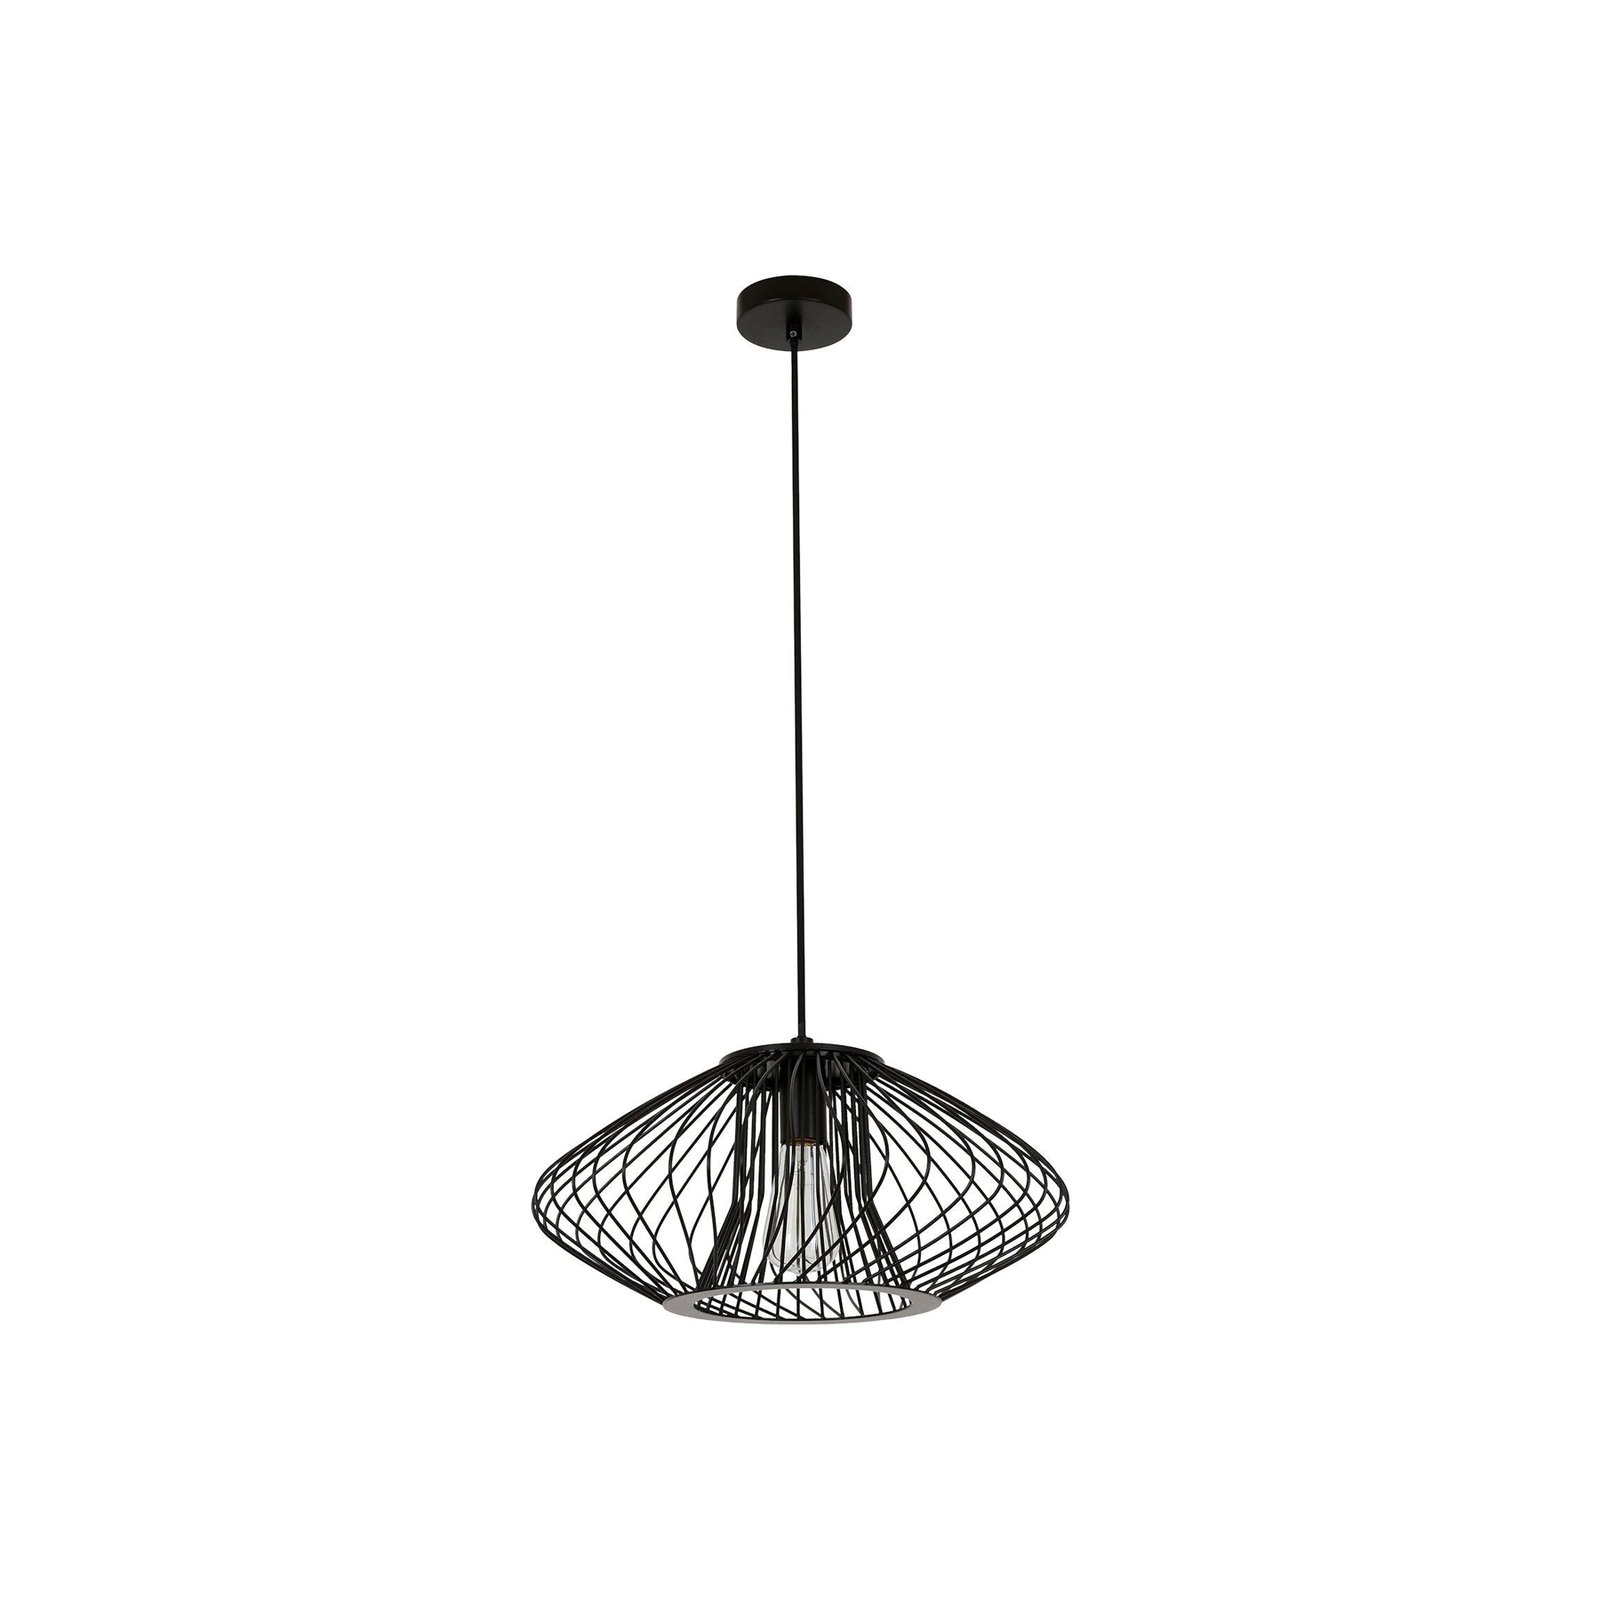 Viseća lampa Beacon Pheonix Squat, crna, metal, Ø 45 cm